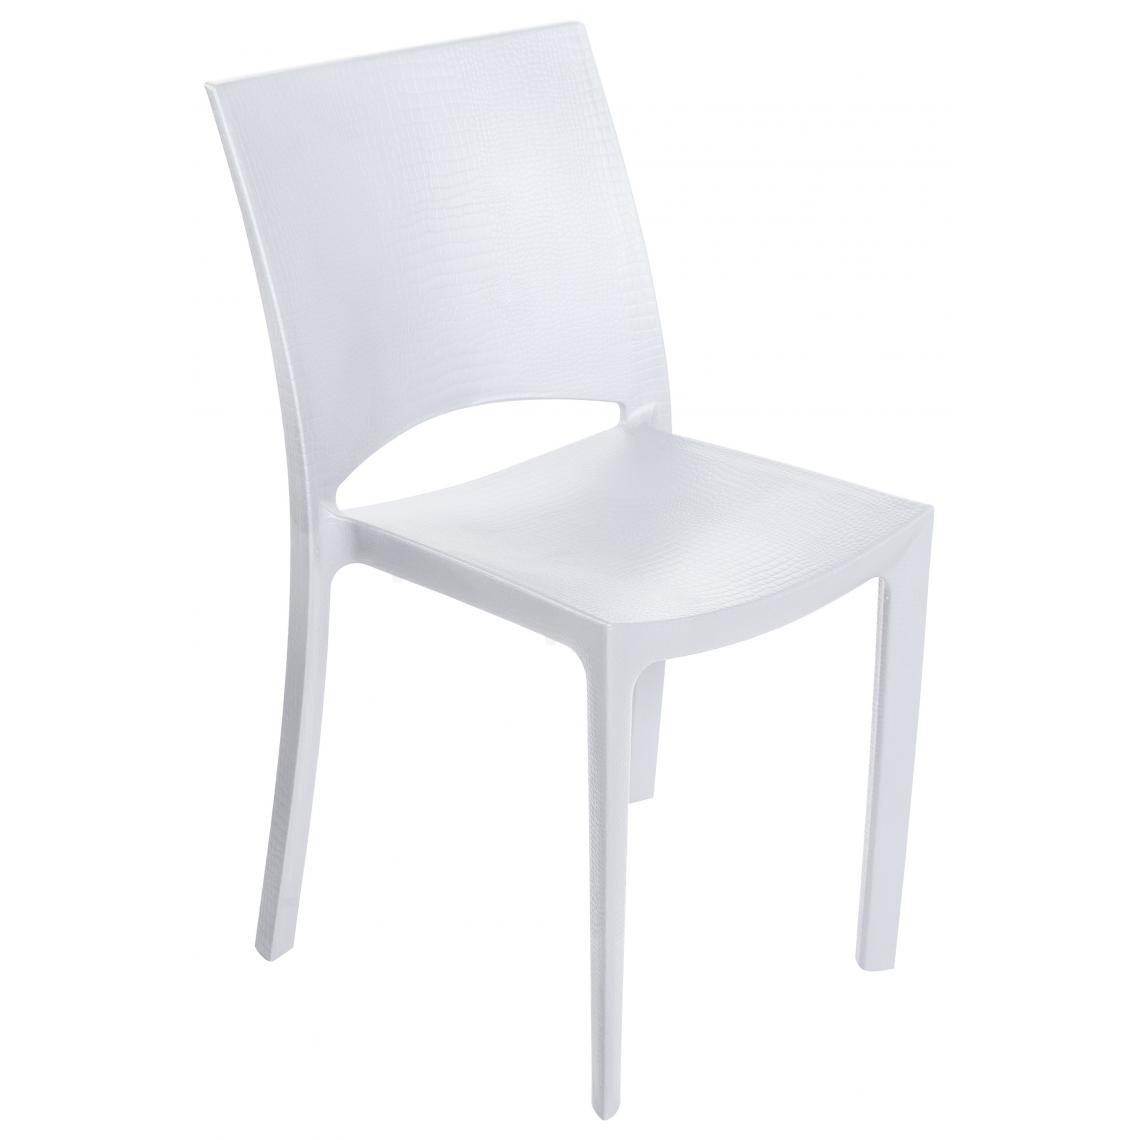 3S. x Home - Chaise Design Blanche Effet Croco ARLEQUIN - Chaises